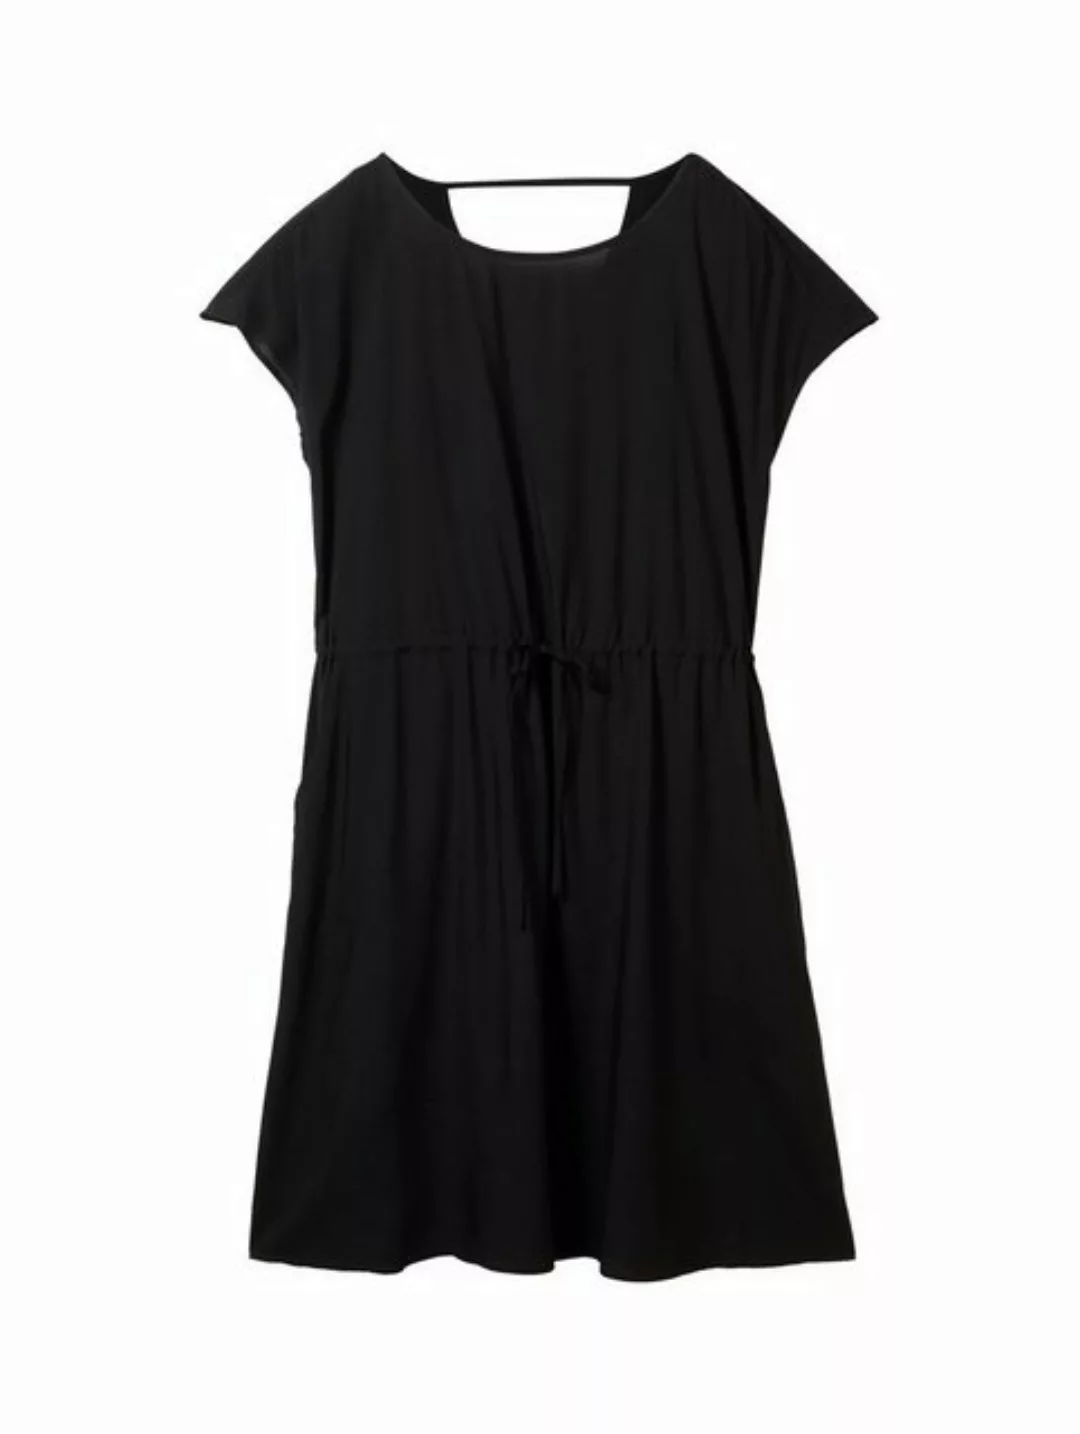 TOM TAILOR Denim Sommerkleid easy viscose dress, Black günstig online kaufen